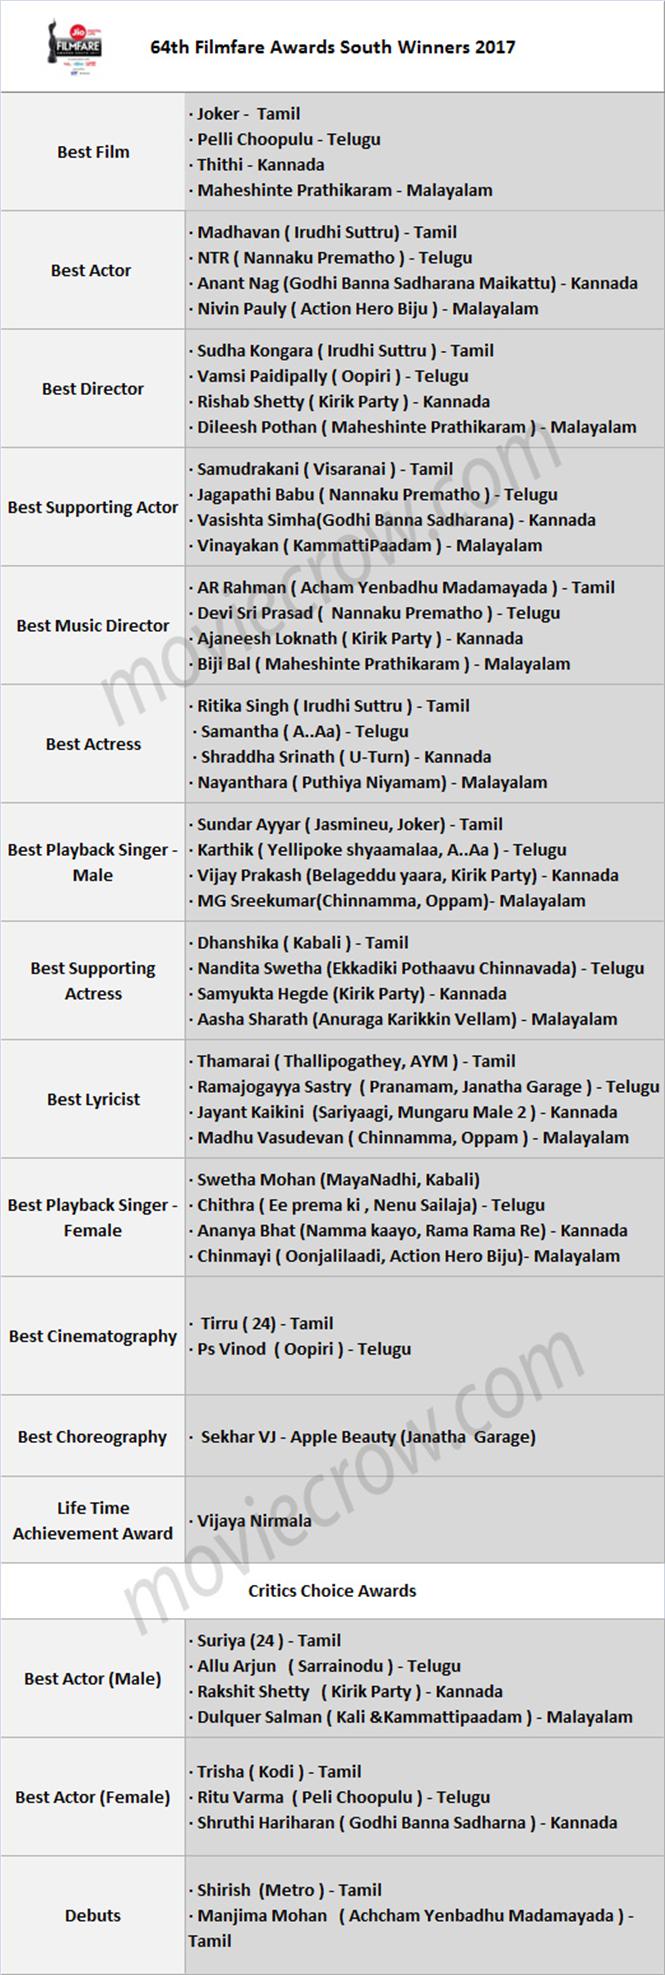 64th Filmfare Awards South Winners 2017